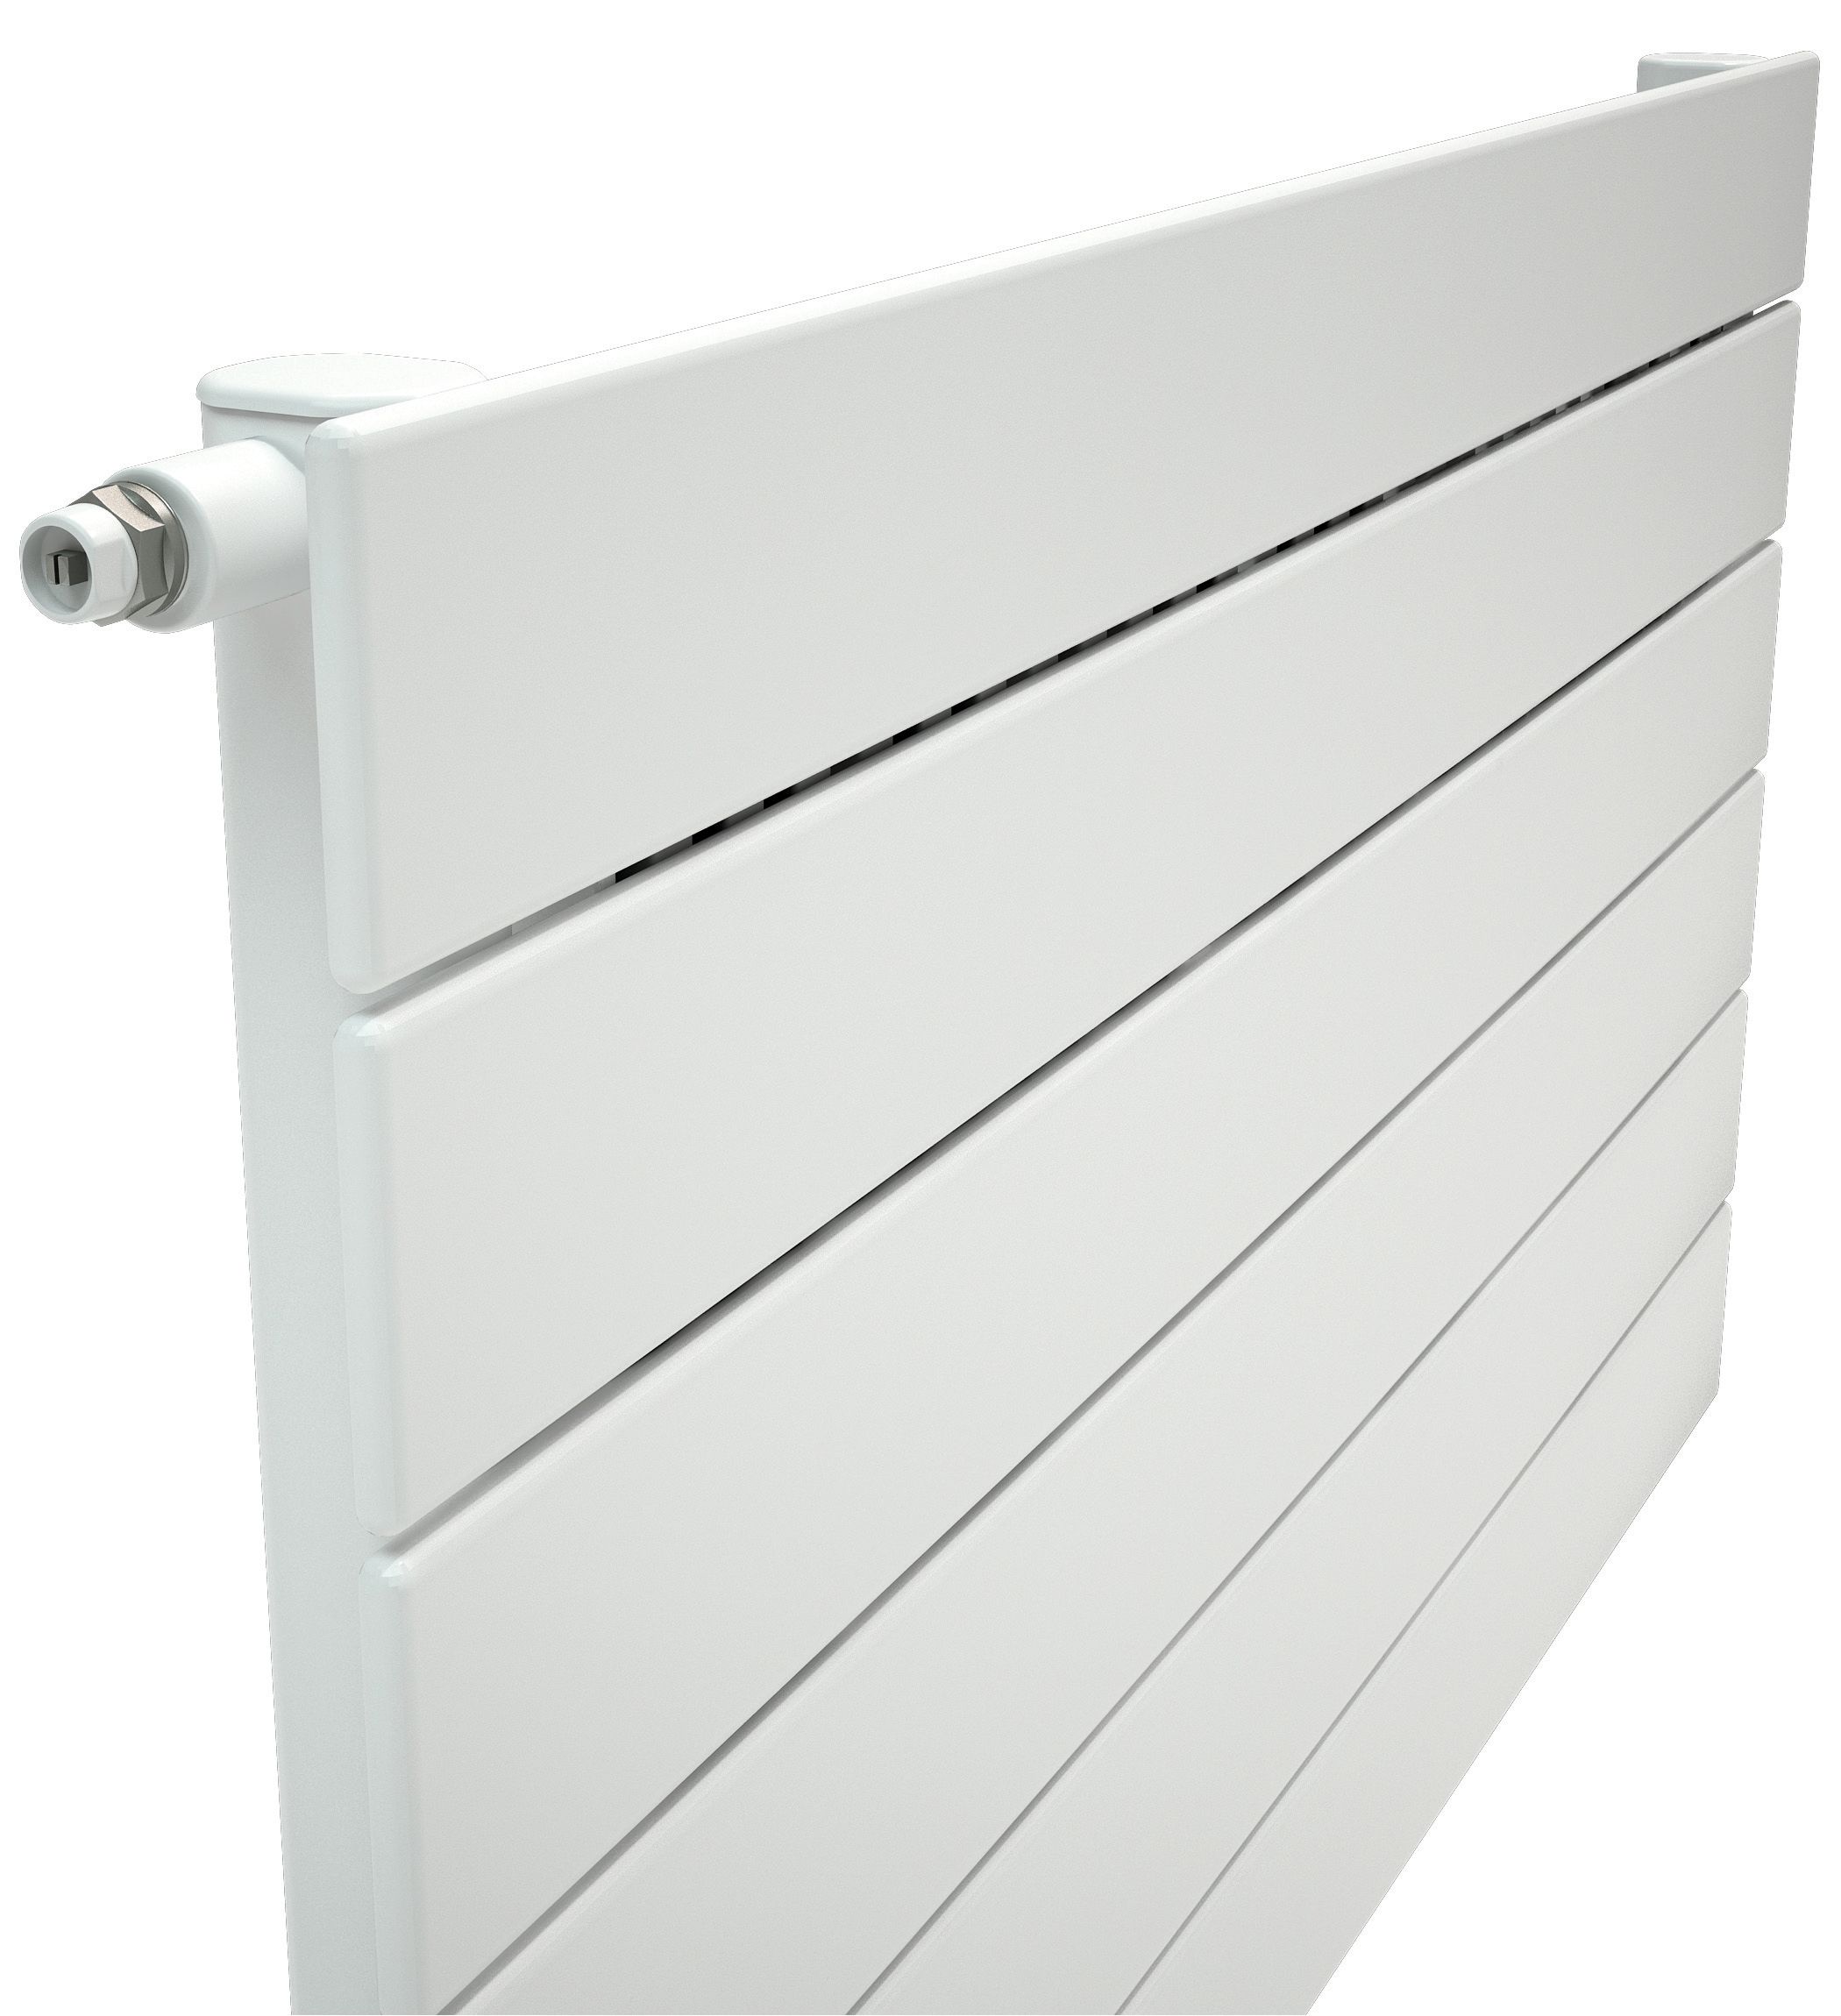 Image of Henrad Verona Single Panel Designer Radiator - White 592 x 600 mm